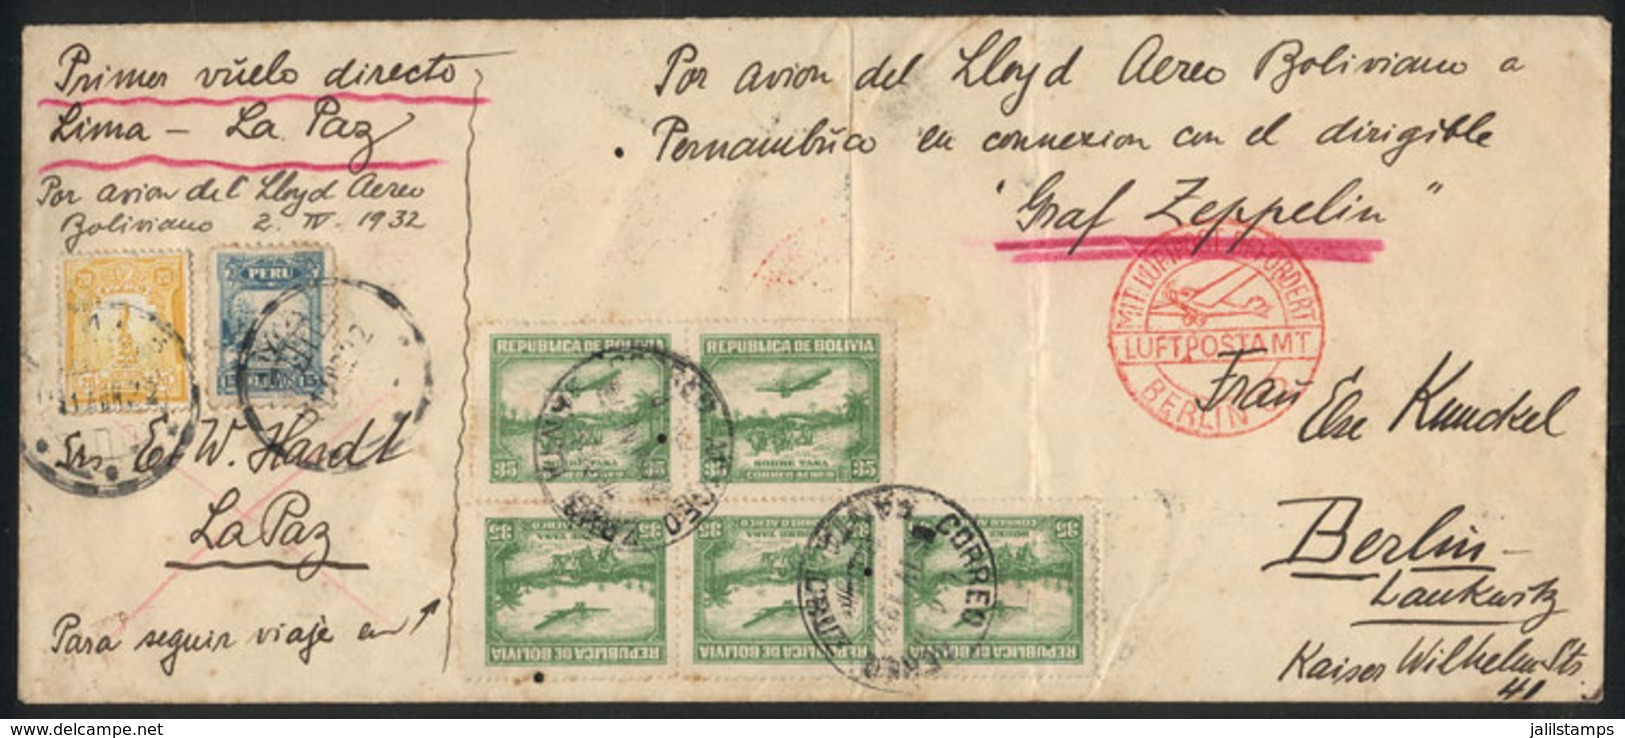 PERU: 1/AP/1932 Lima - La Paz - Berlin, Airmail Cover Flown On The First Direct Flight Lima - La Paz By Lloyd Aéreo Boli - Peru